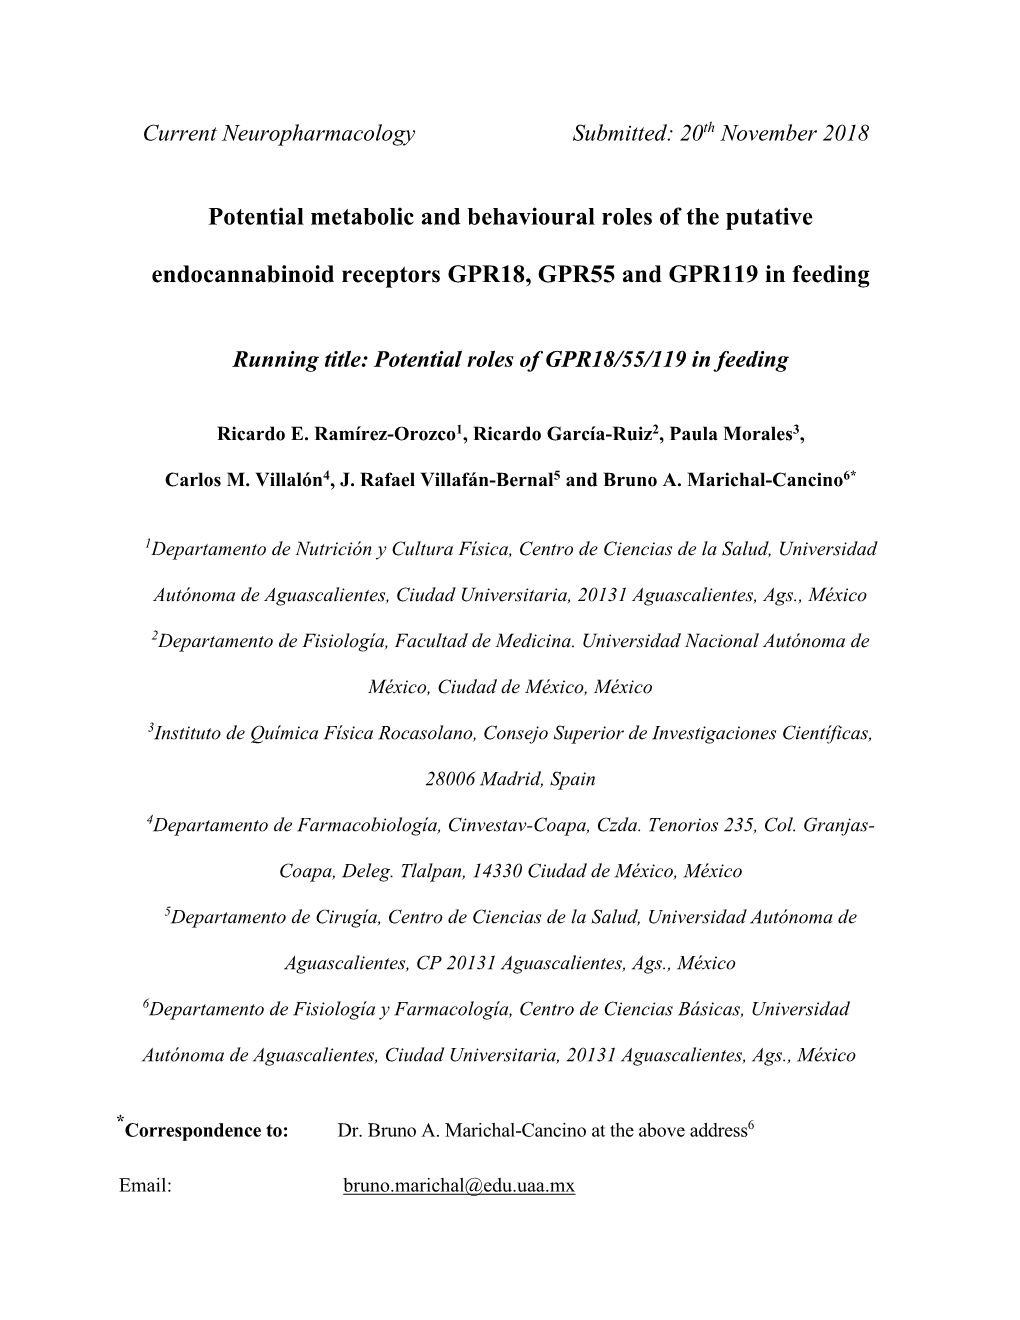 Potential Metabolic and Behavioural Roles of the Putative Endocannabinoid Receptors GPR18, GPR55 and GPR119 in Feeding